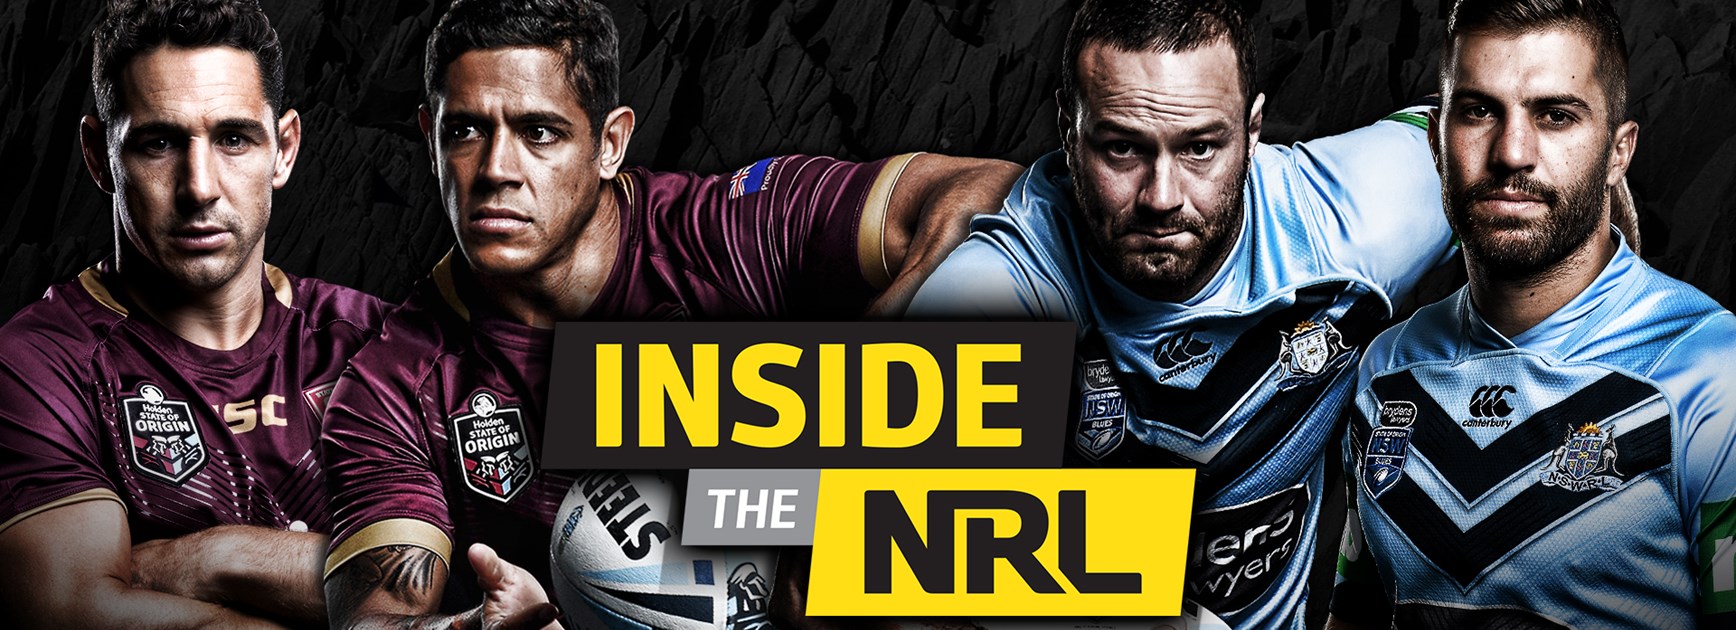 Watch: Inside the NRL - Origin special